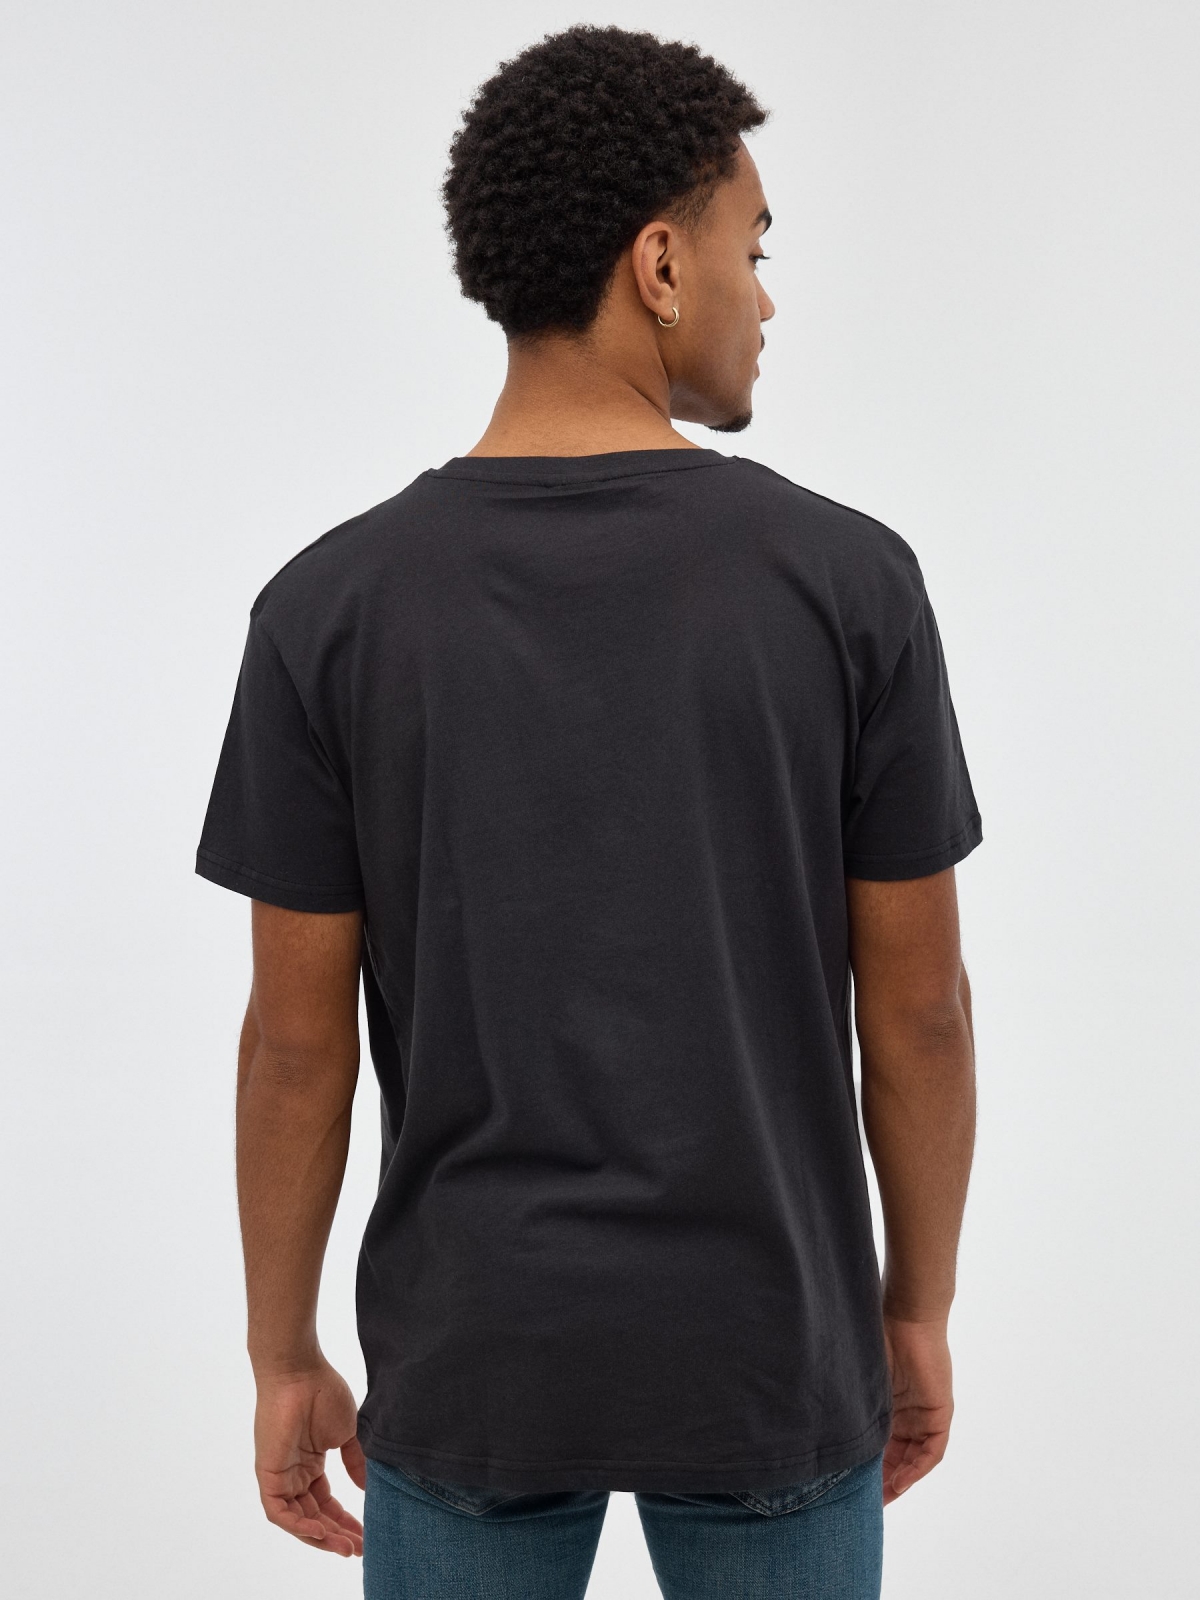 Camiseta Bob Esponja negro vista media trasera